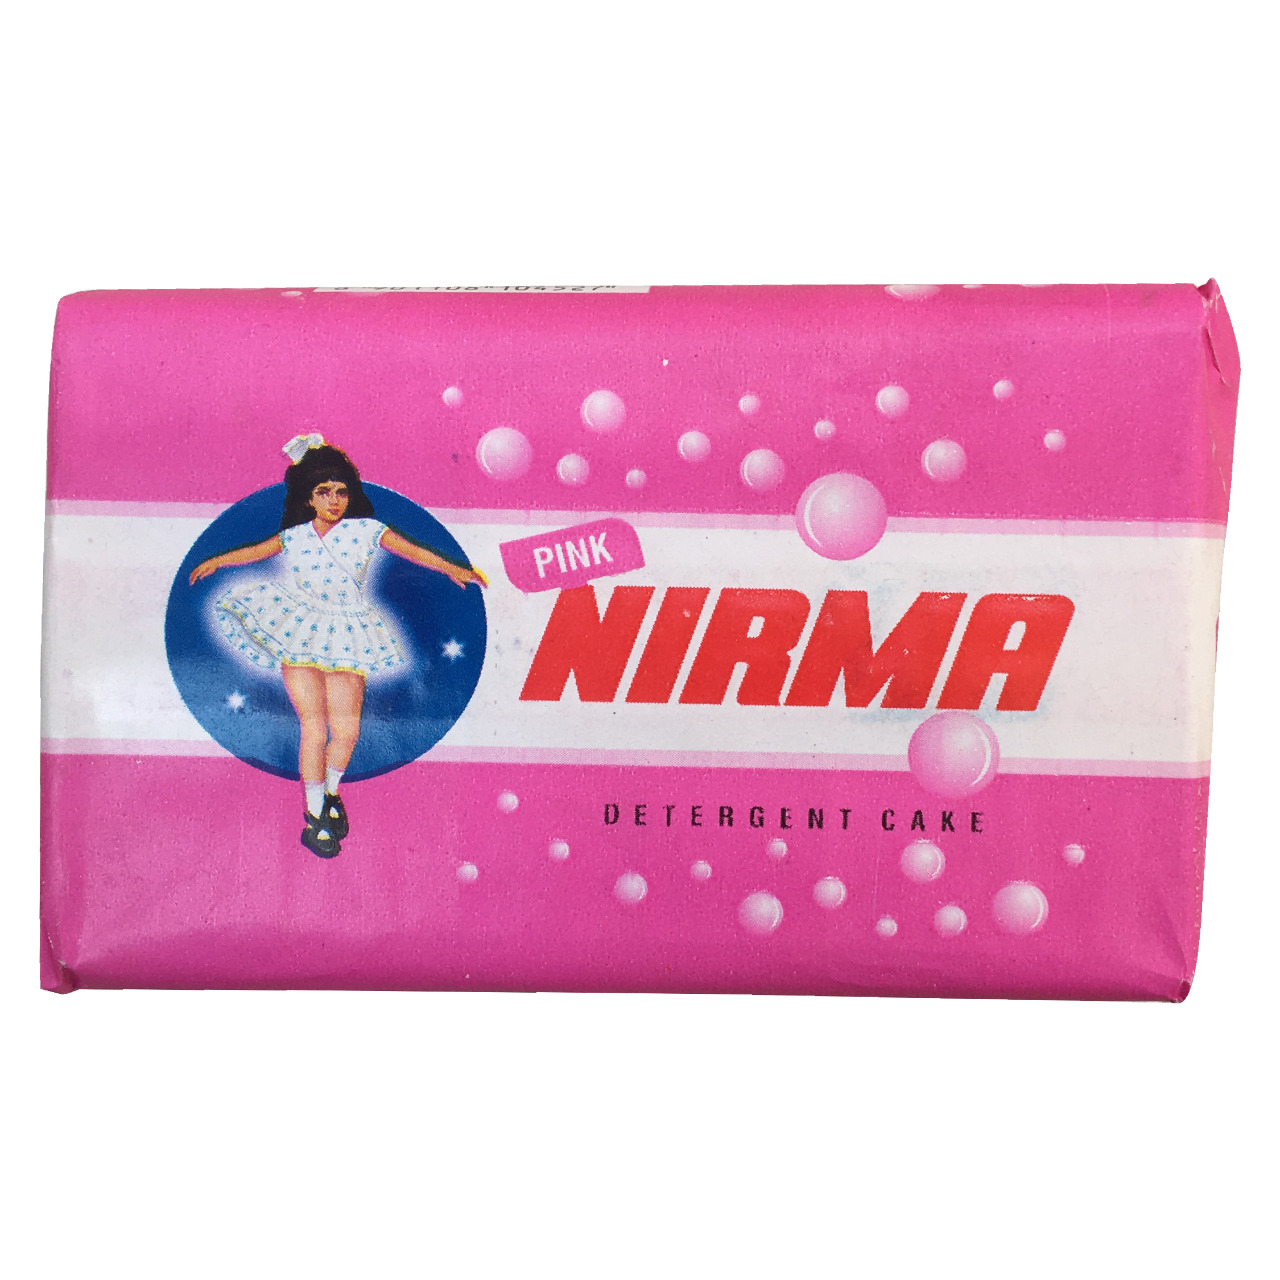 Nirma Detergent Cake 125g